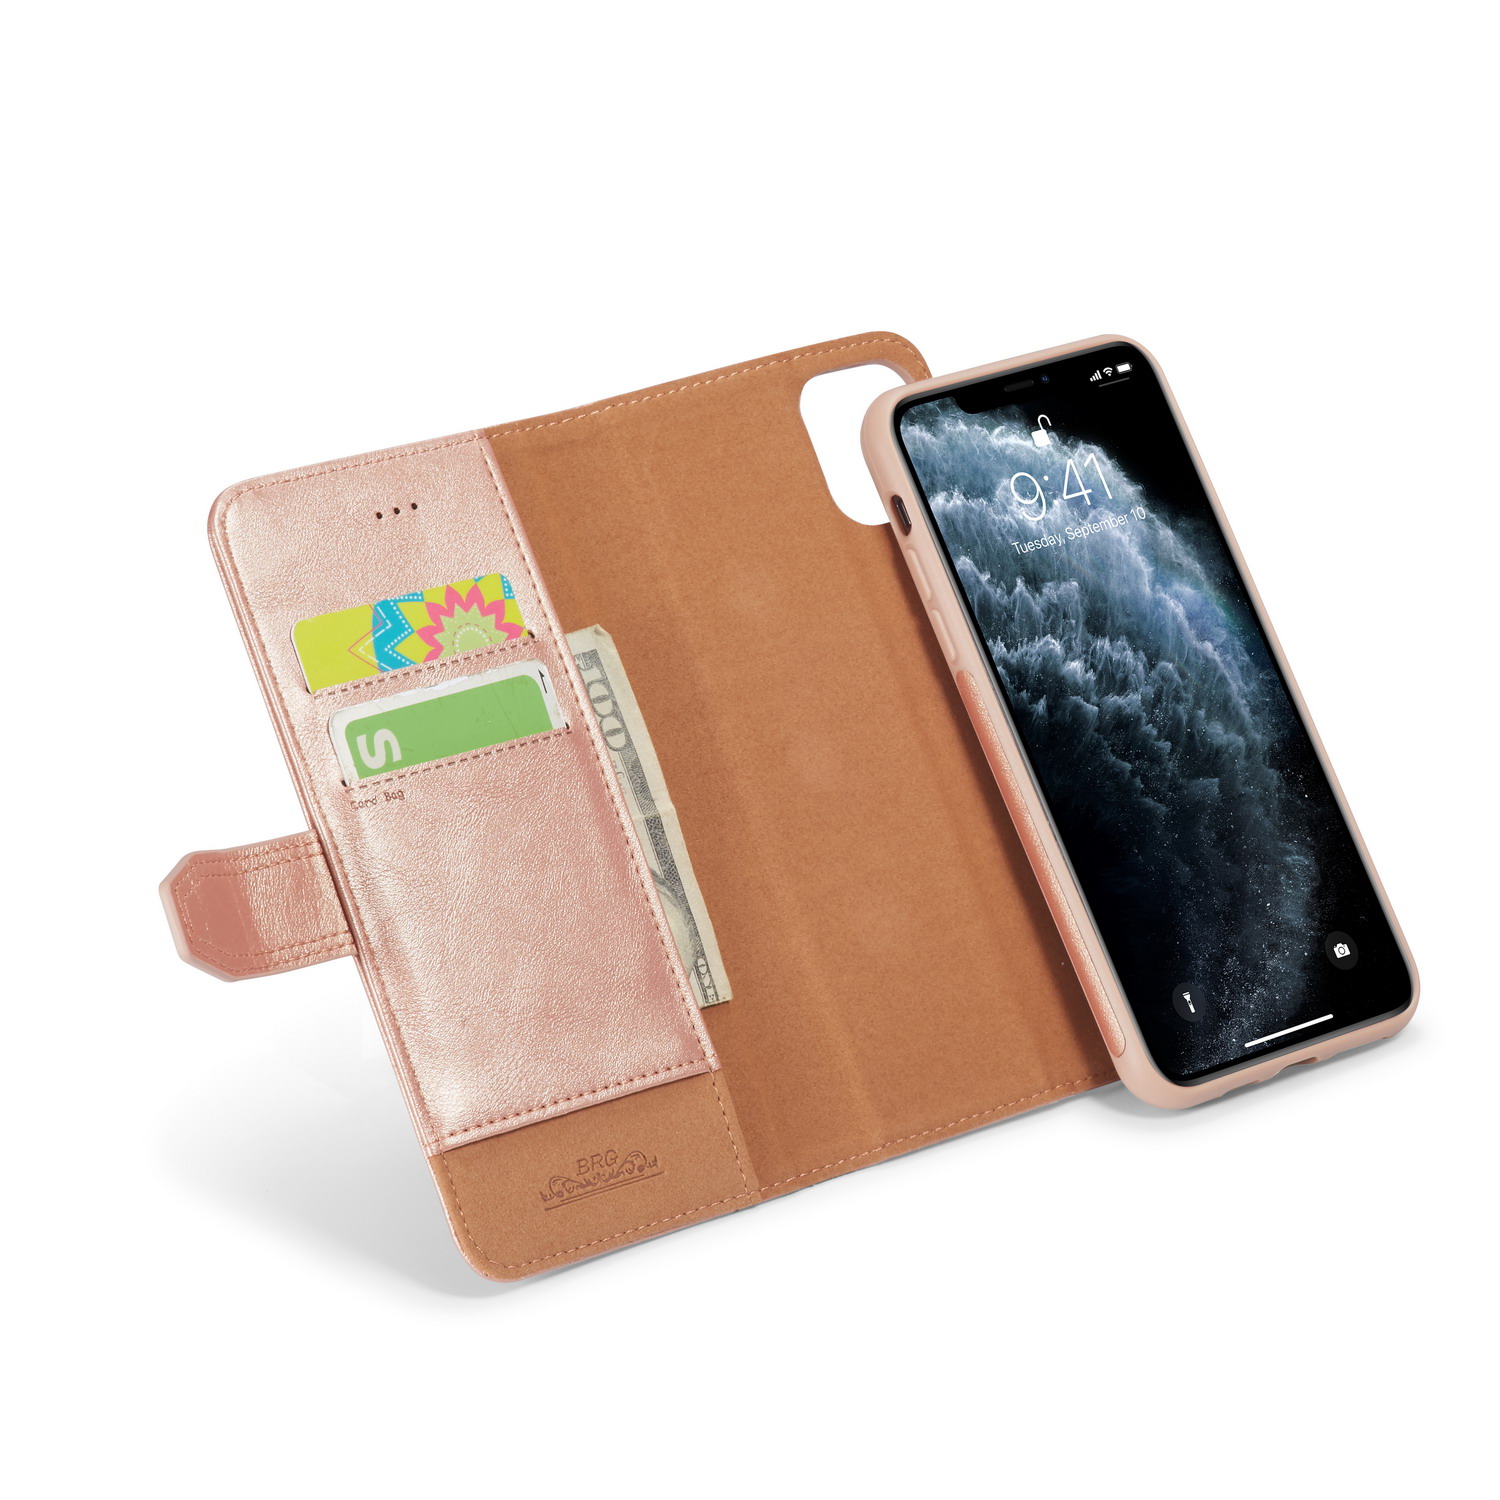 BRG Luxury plånboksfodral med ställ, iPhone 11 Pro, rosa